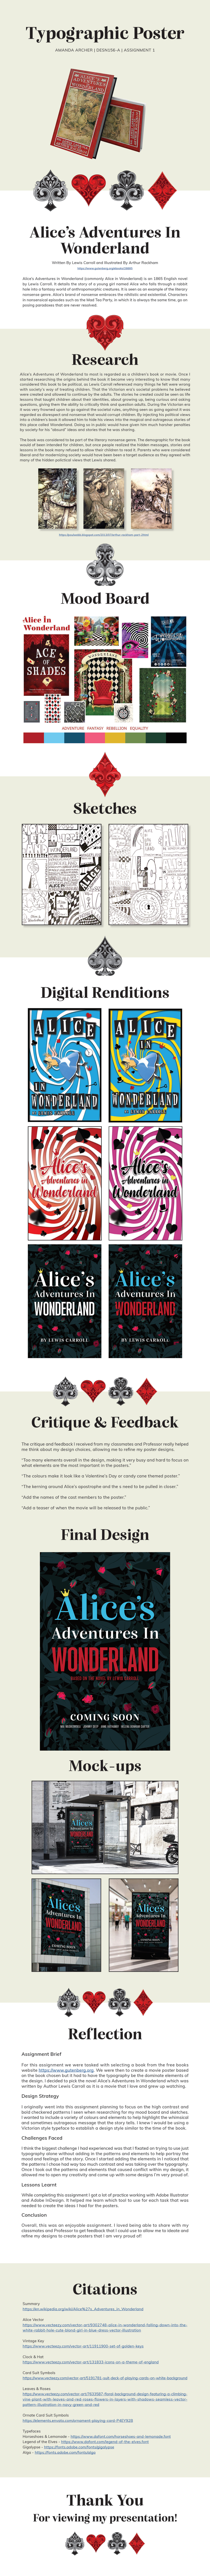 alice in wonderland Digital Art  Typographic Design typographic poster typography   design graphic design  poster Poster Design movie poster